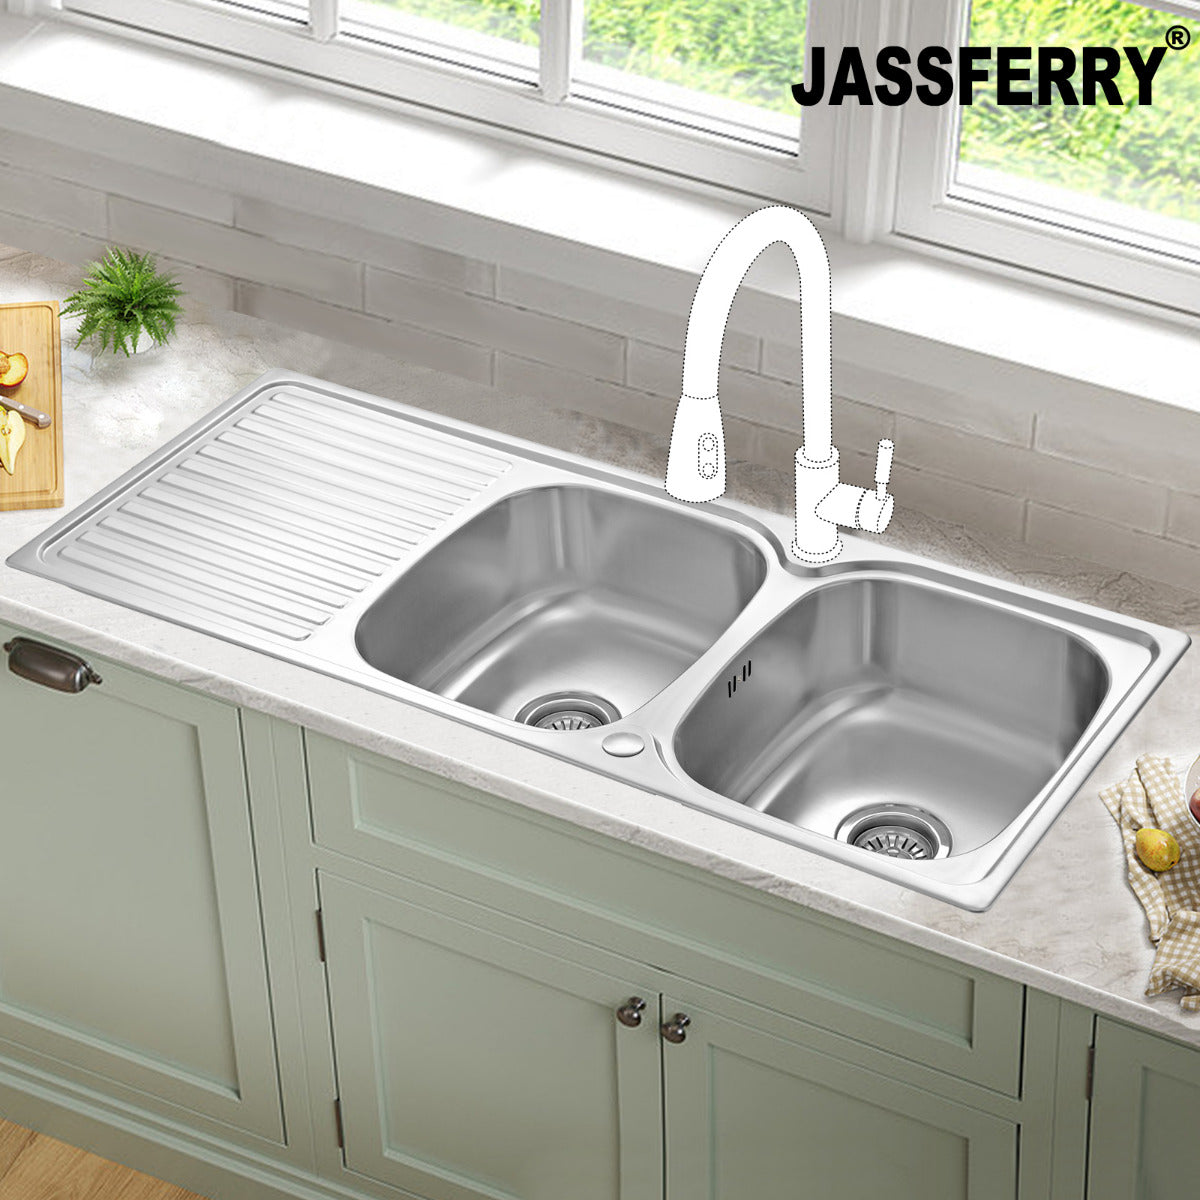 JassferryJASSFERRY Stainless Steel Kitchen Sink Inset Double Bowl Reversible DrainerKitchen Sinks